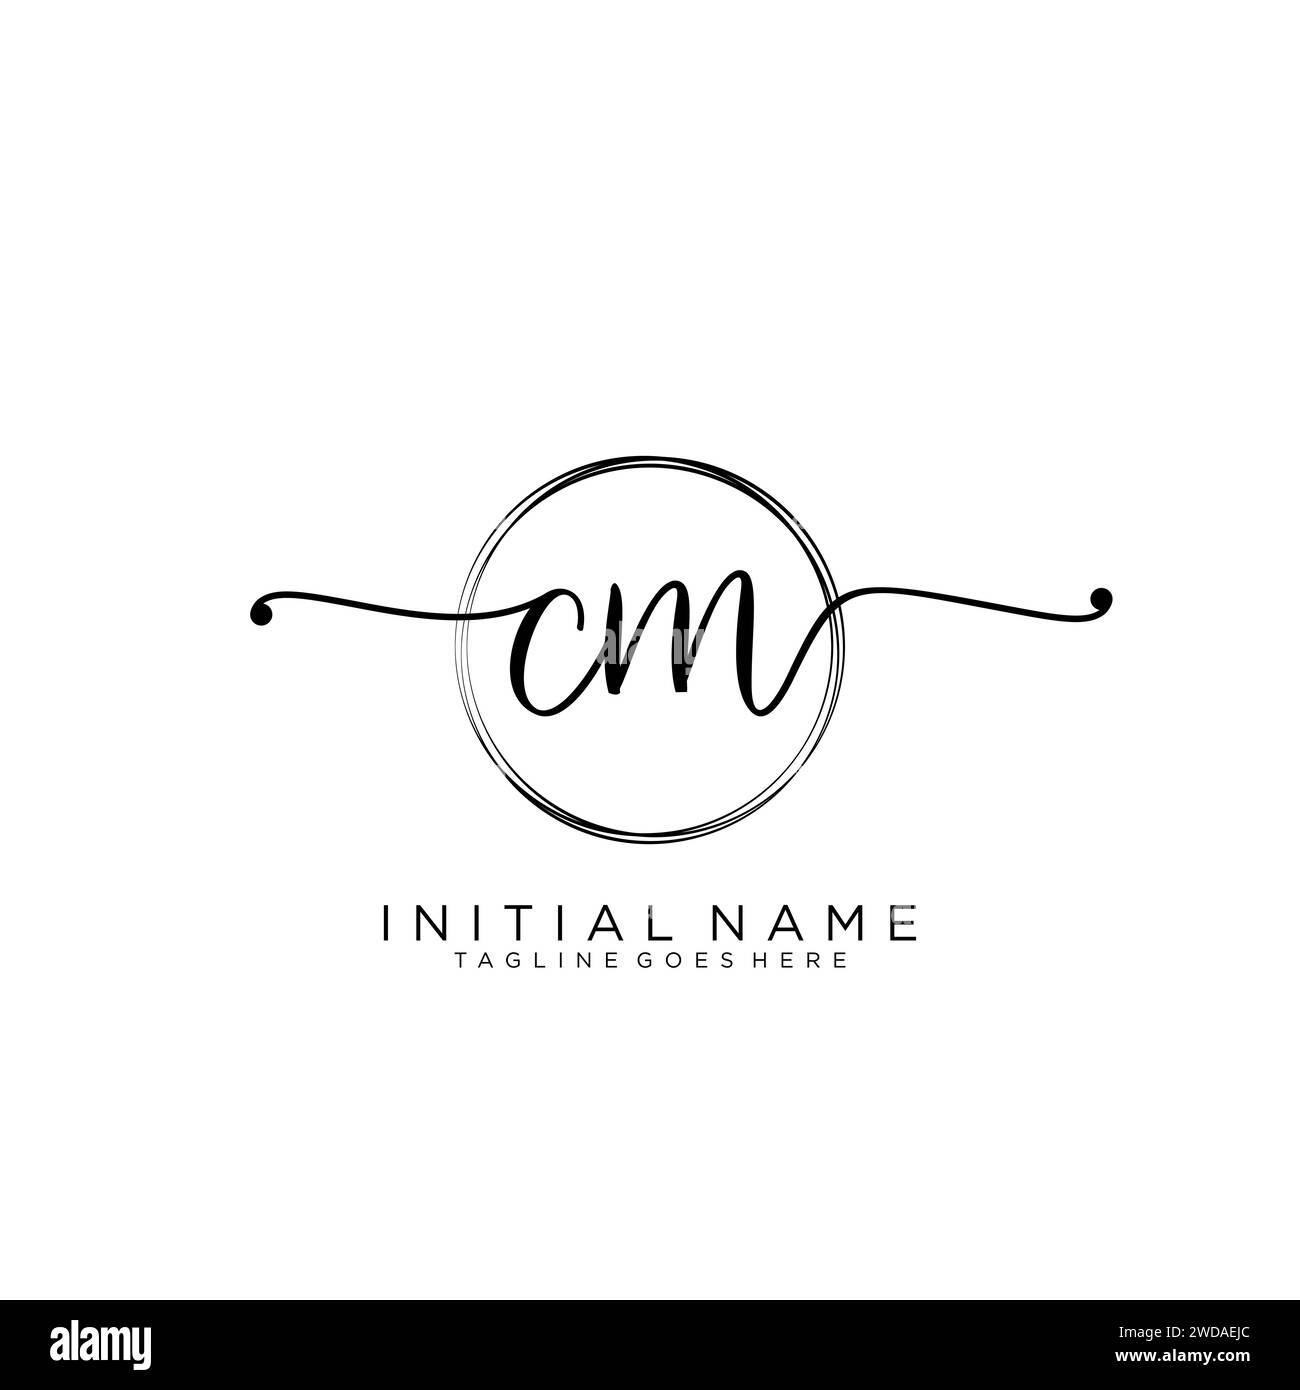 CM Initial handwriting logo with circle Stock Vector